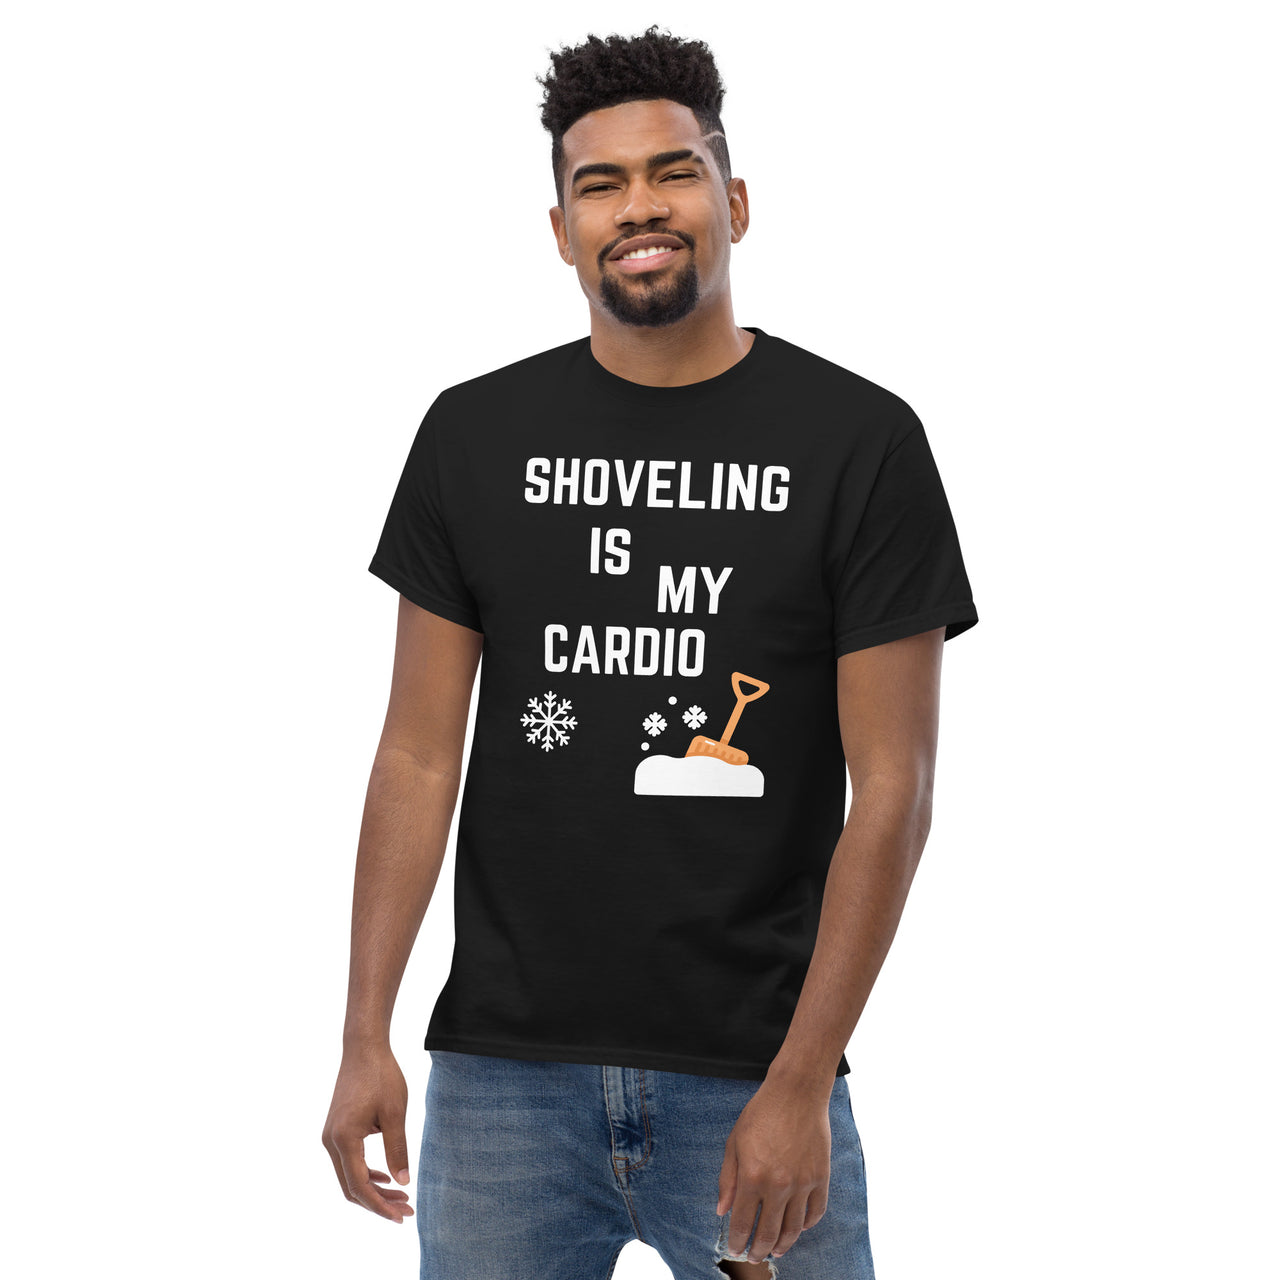 Shoveling Is My Cardio Funny Workout Exercising Tshirt